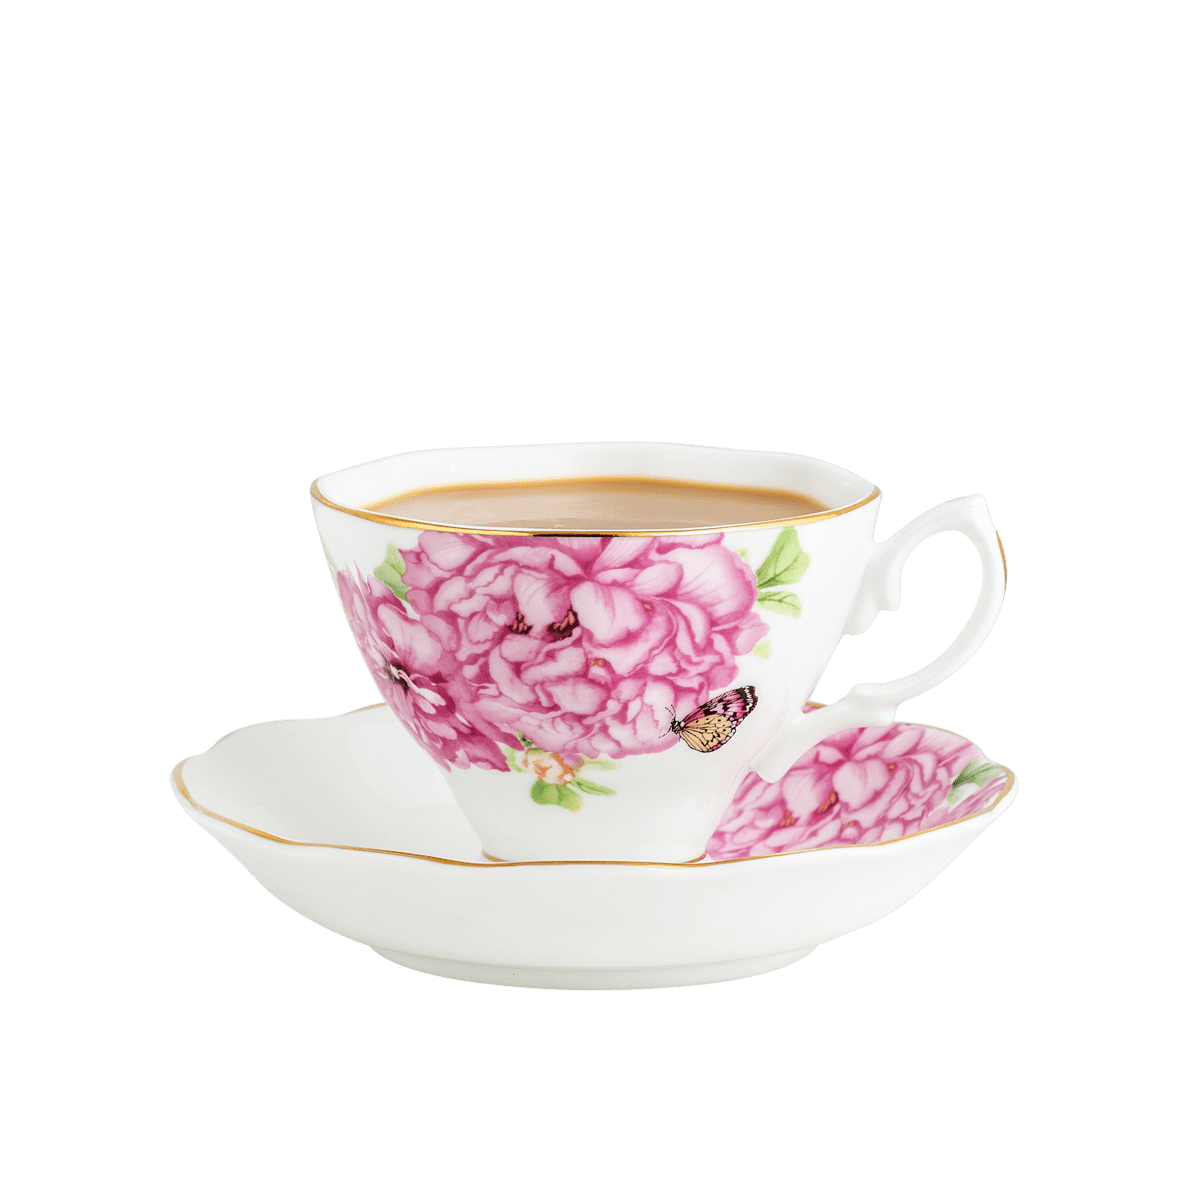 Miranda Kerr Tea Cup & Saucer